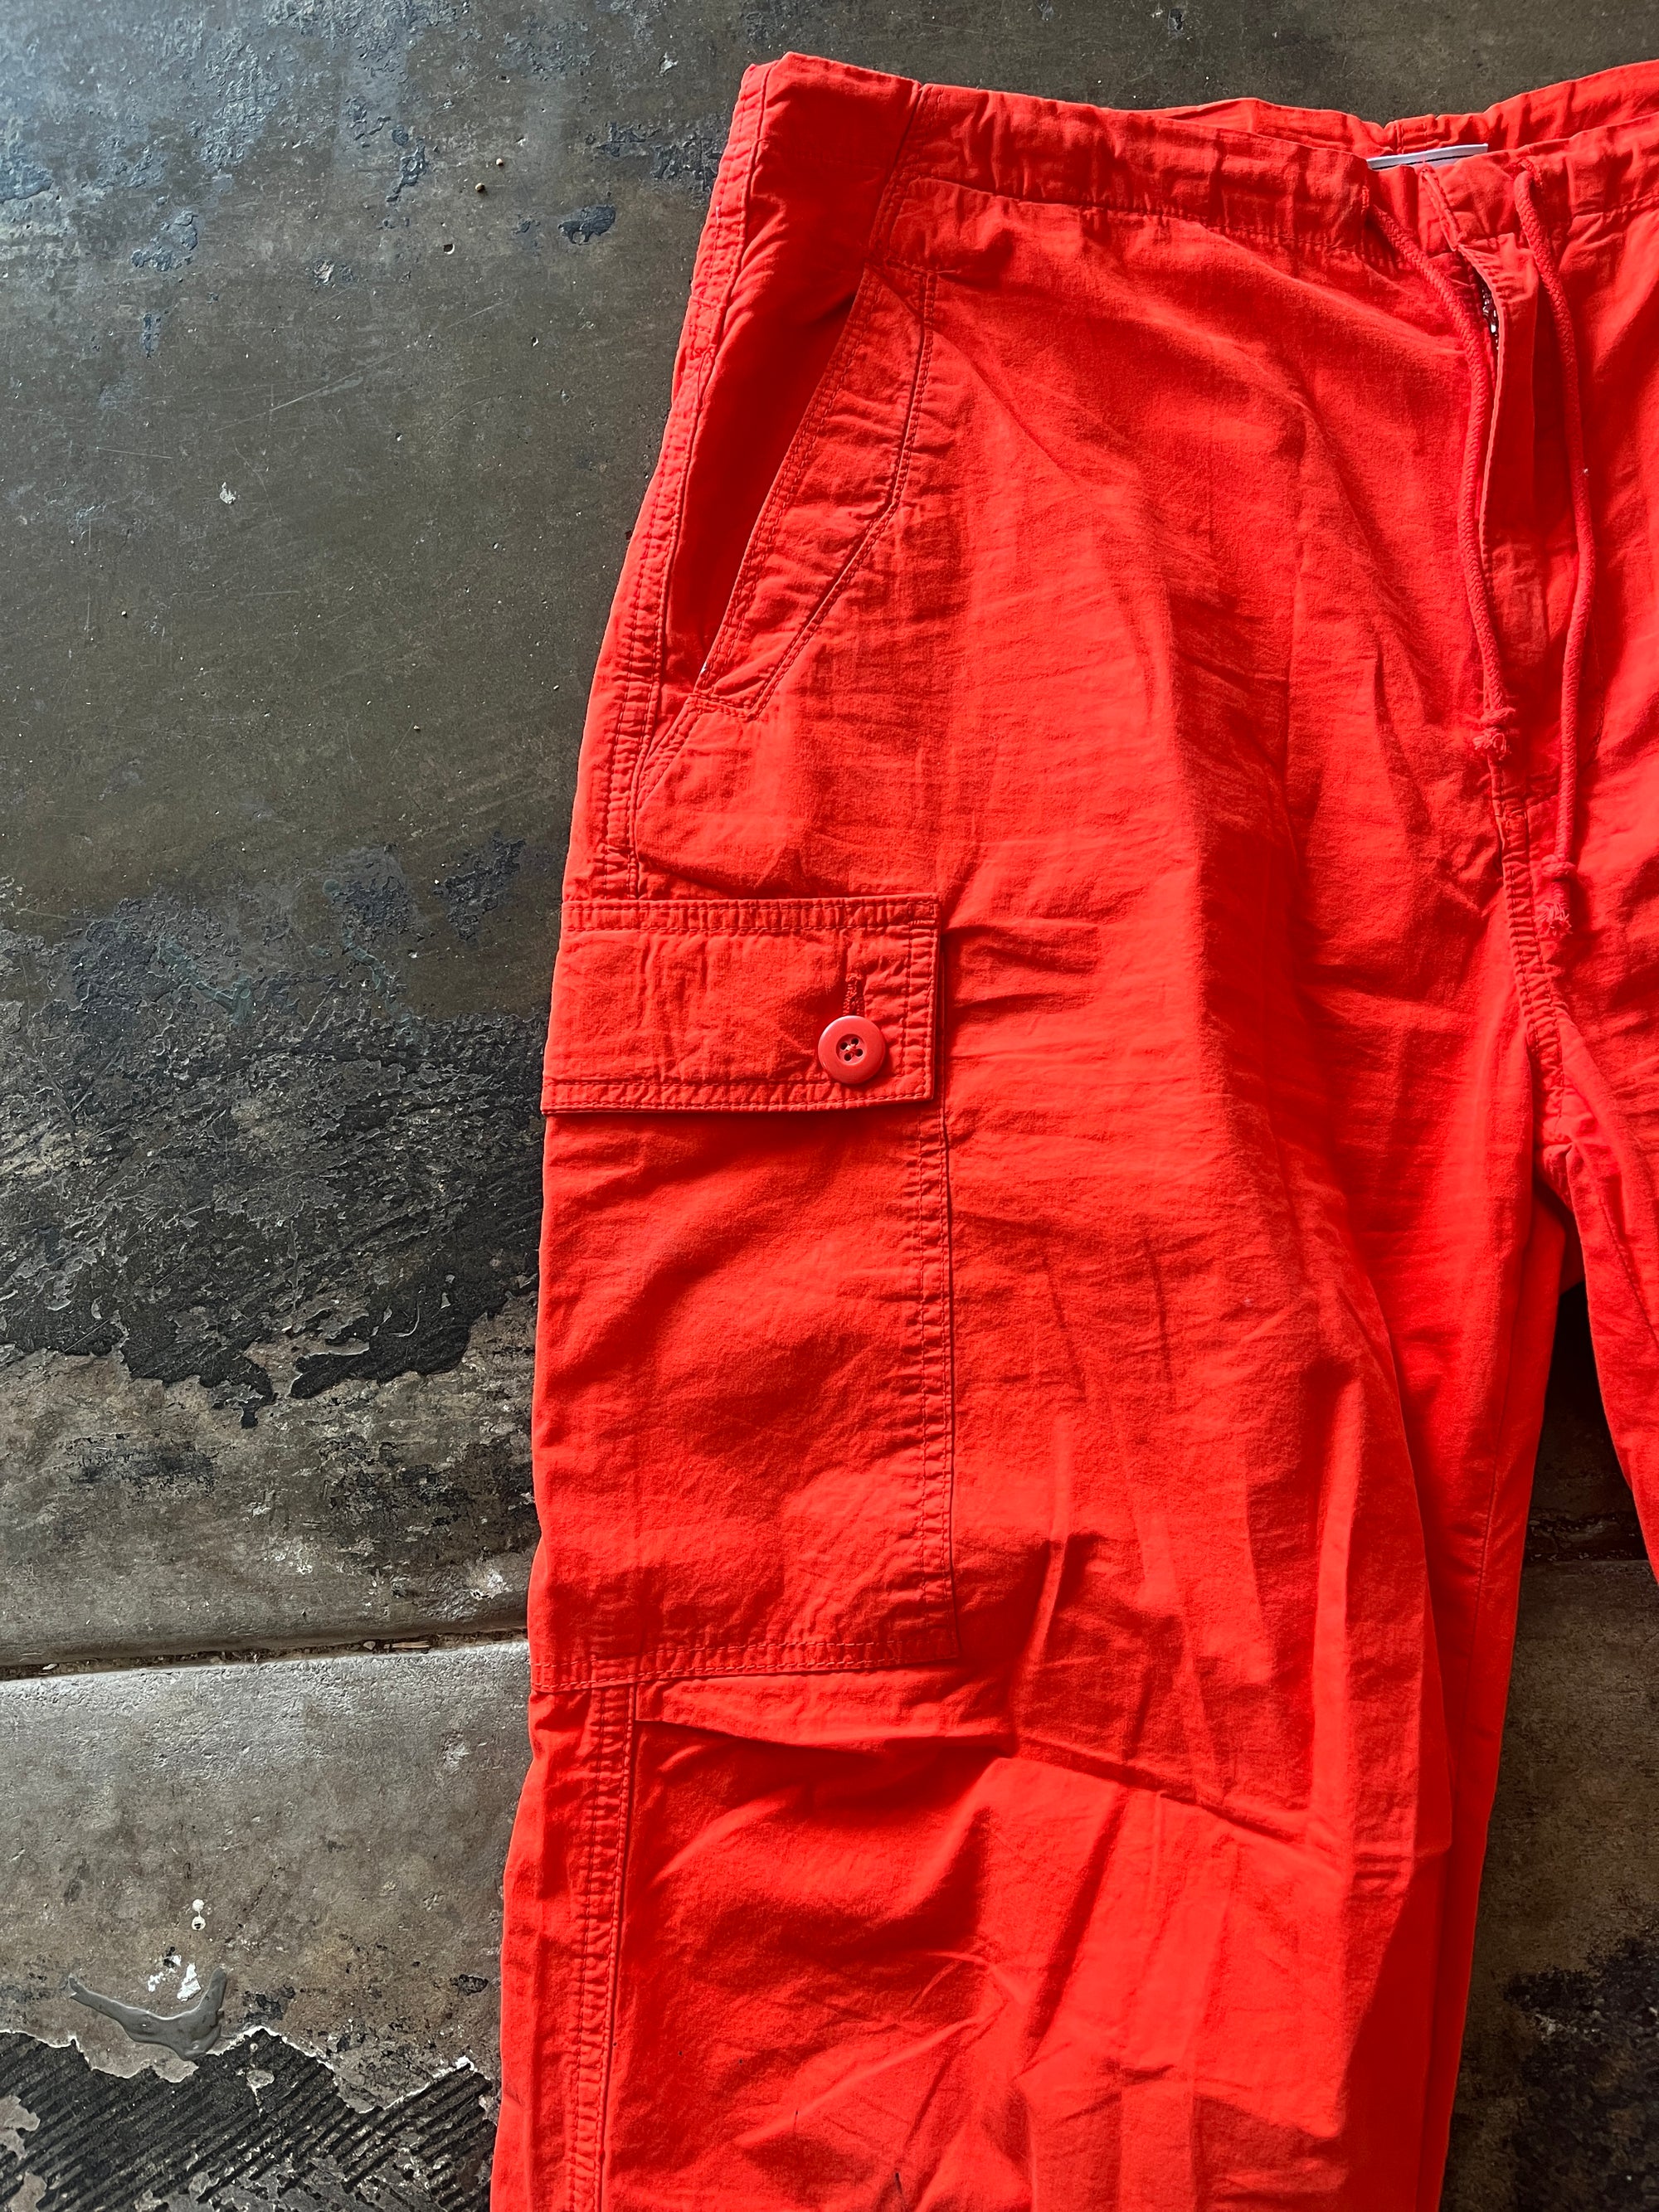 Outdoor Voices Red/Orange Cargo Pants